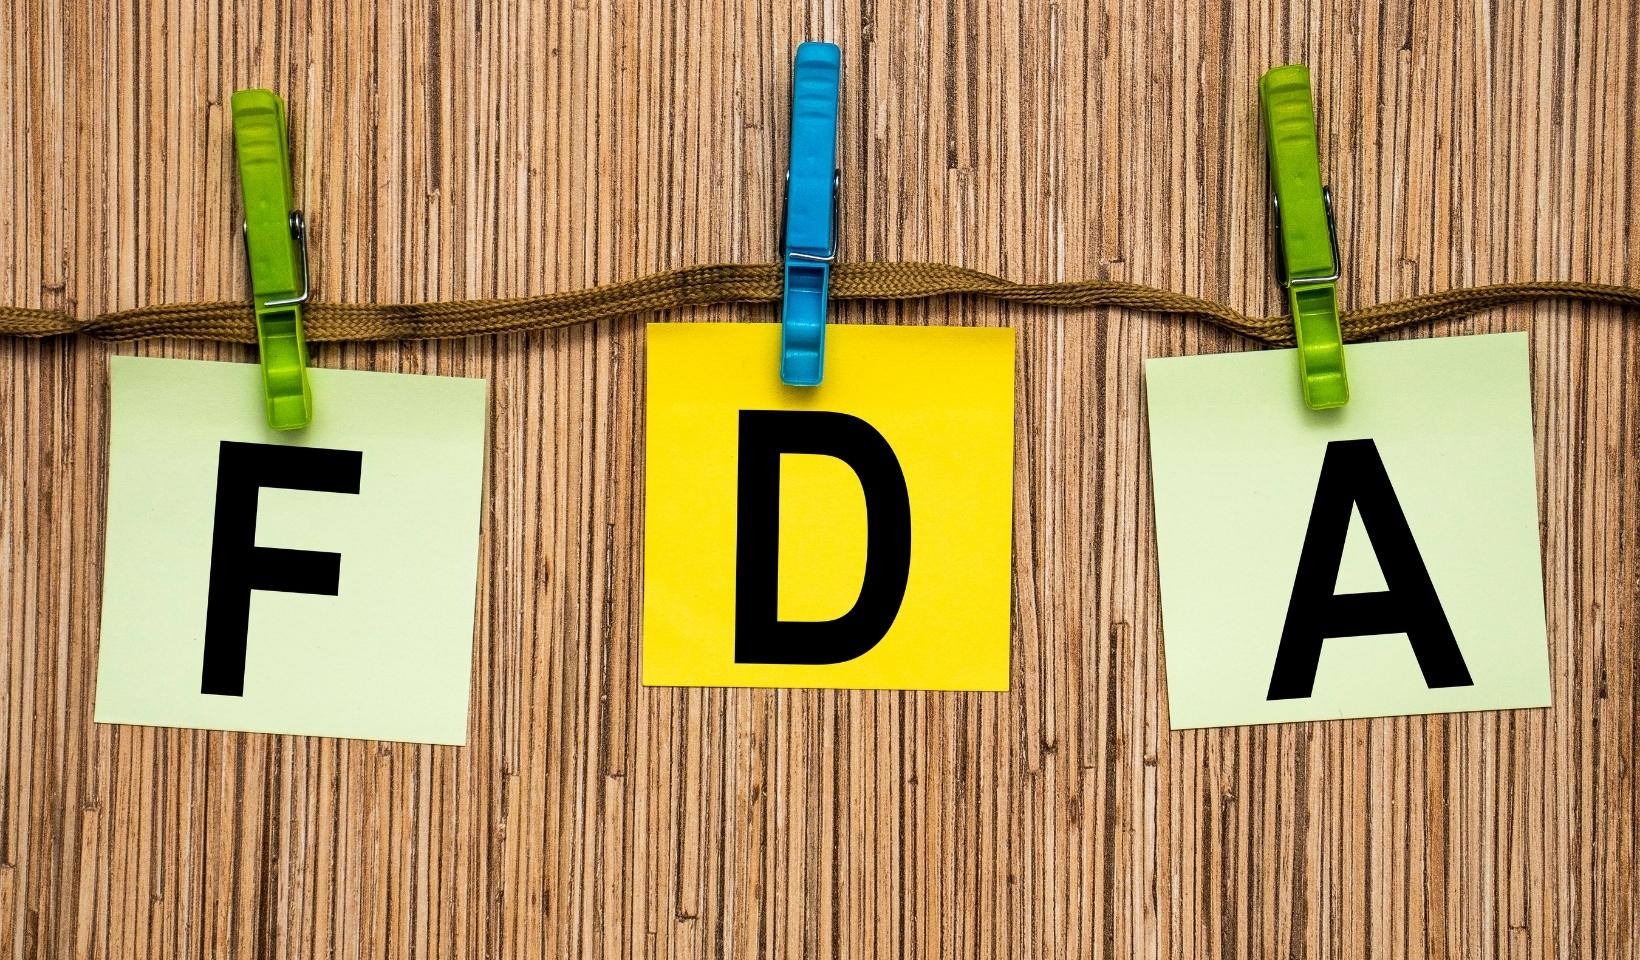 FDA viết tắt của Food and Drug Administration